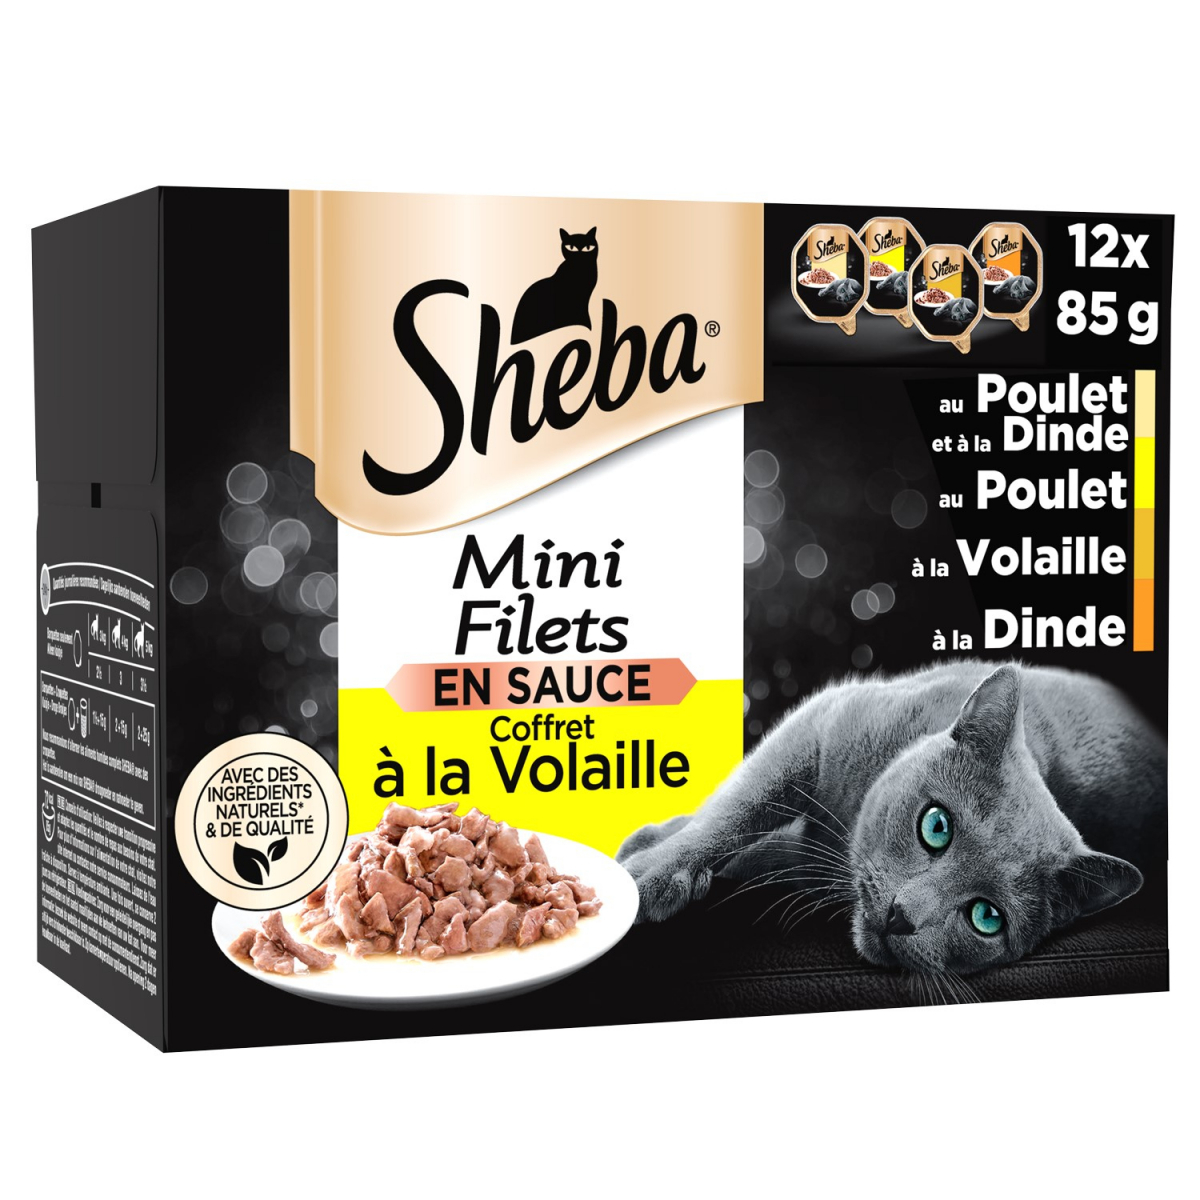 Verder Sterkte Verslaving SHEBA Natvoer voor katten Mini Filets in saus met gevogelte